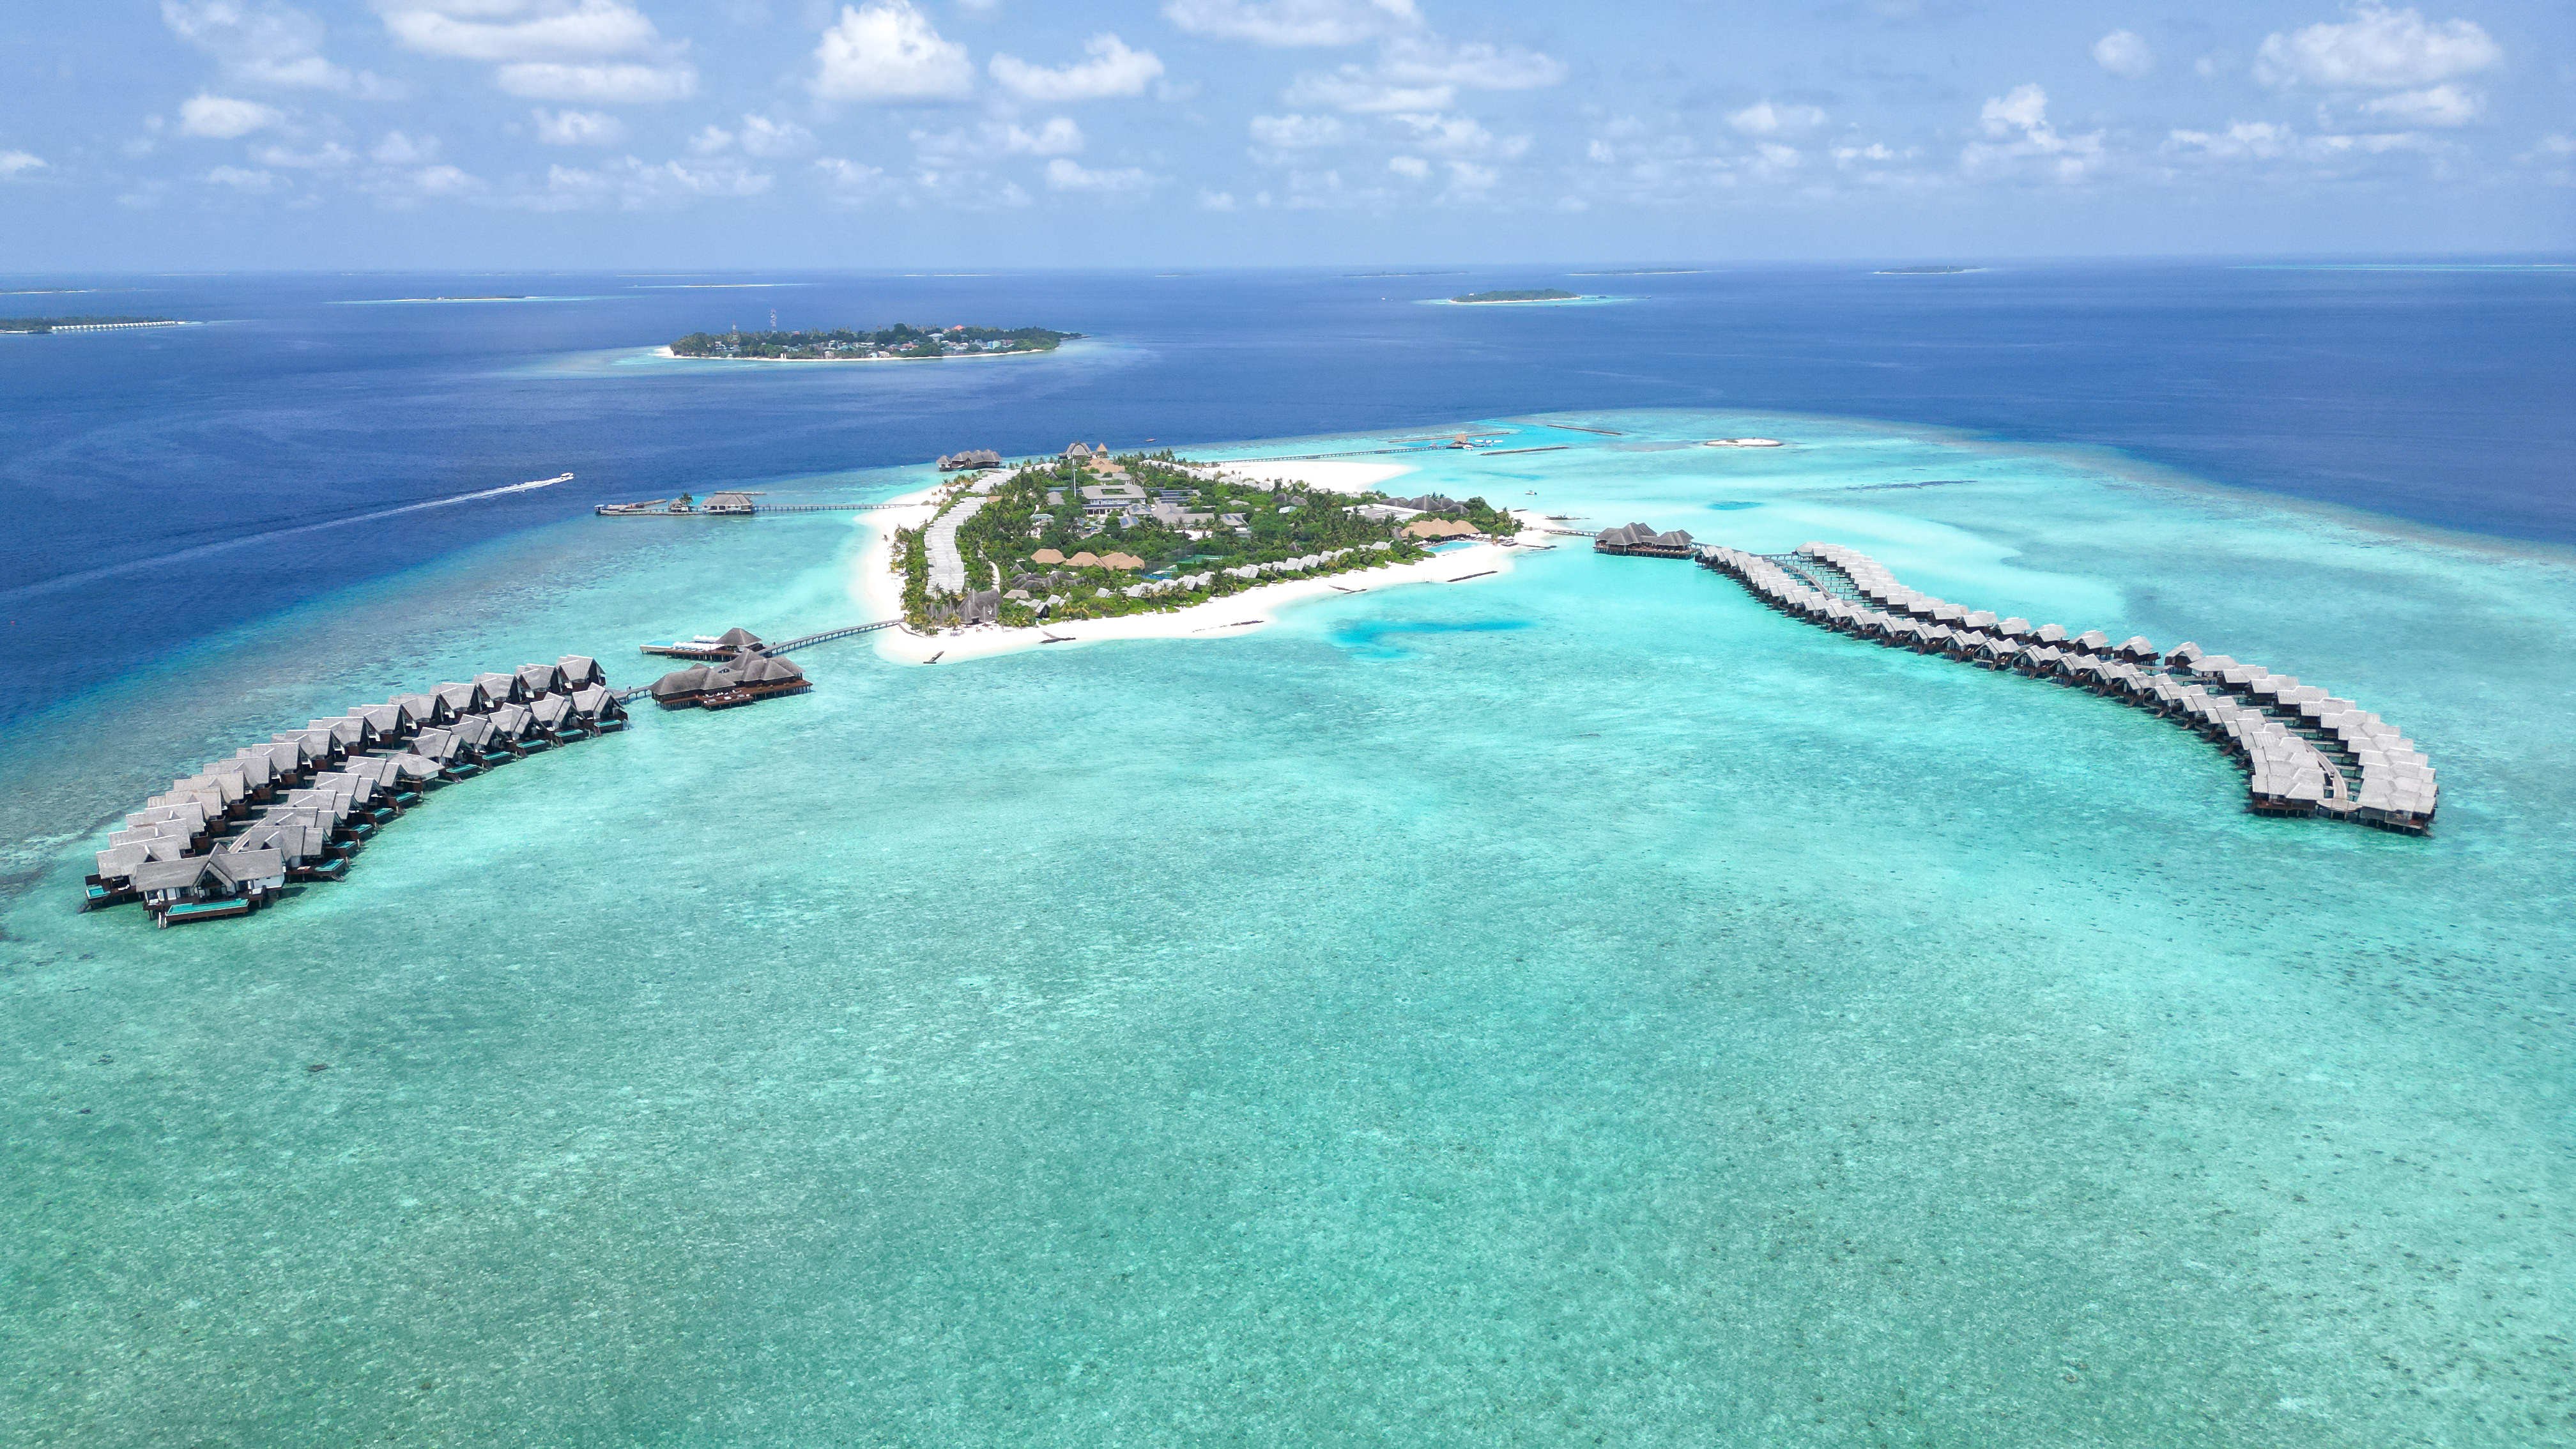 Maldive: over water o beach bungalow?